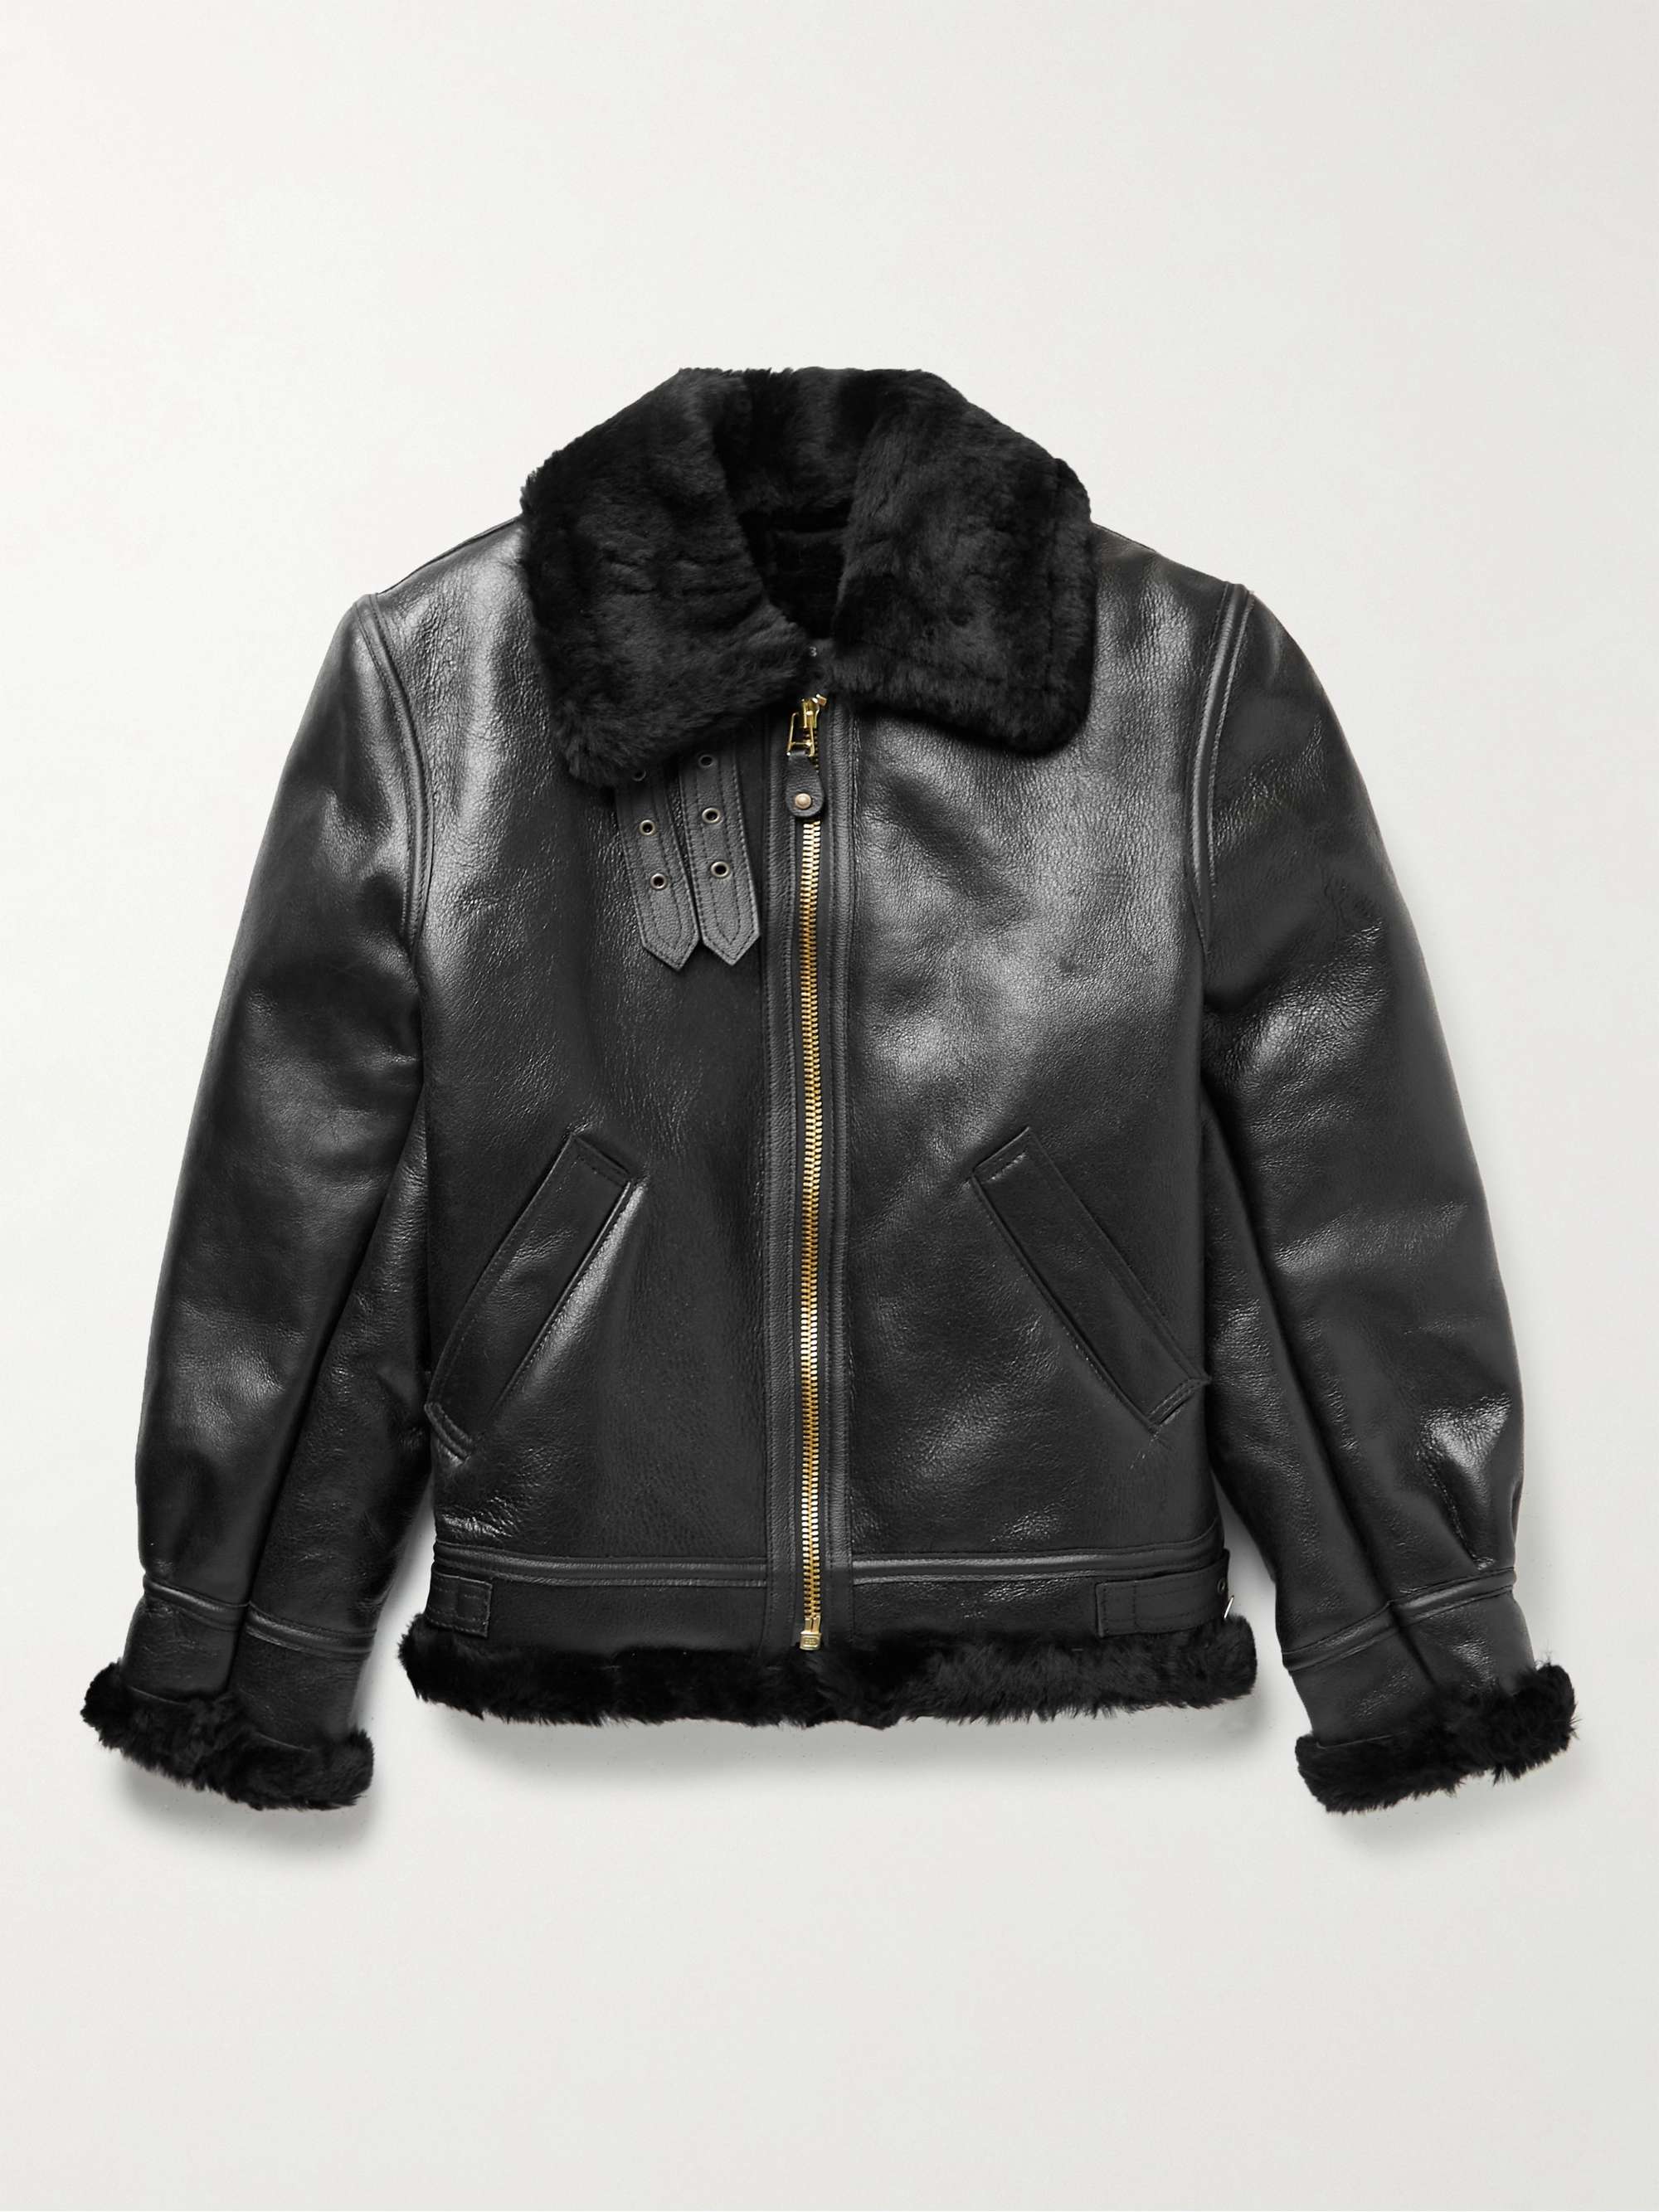 SCHOTT B-3 Shearling-Lined Leather Jacket for Men | MR PORTER